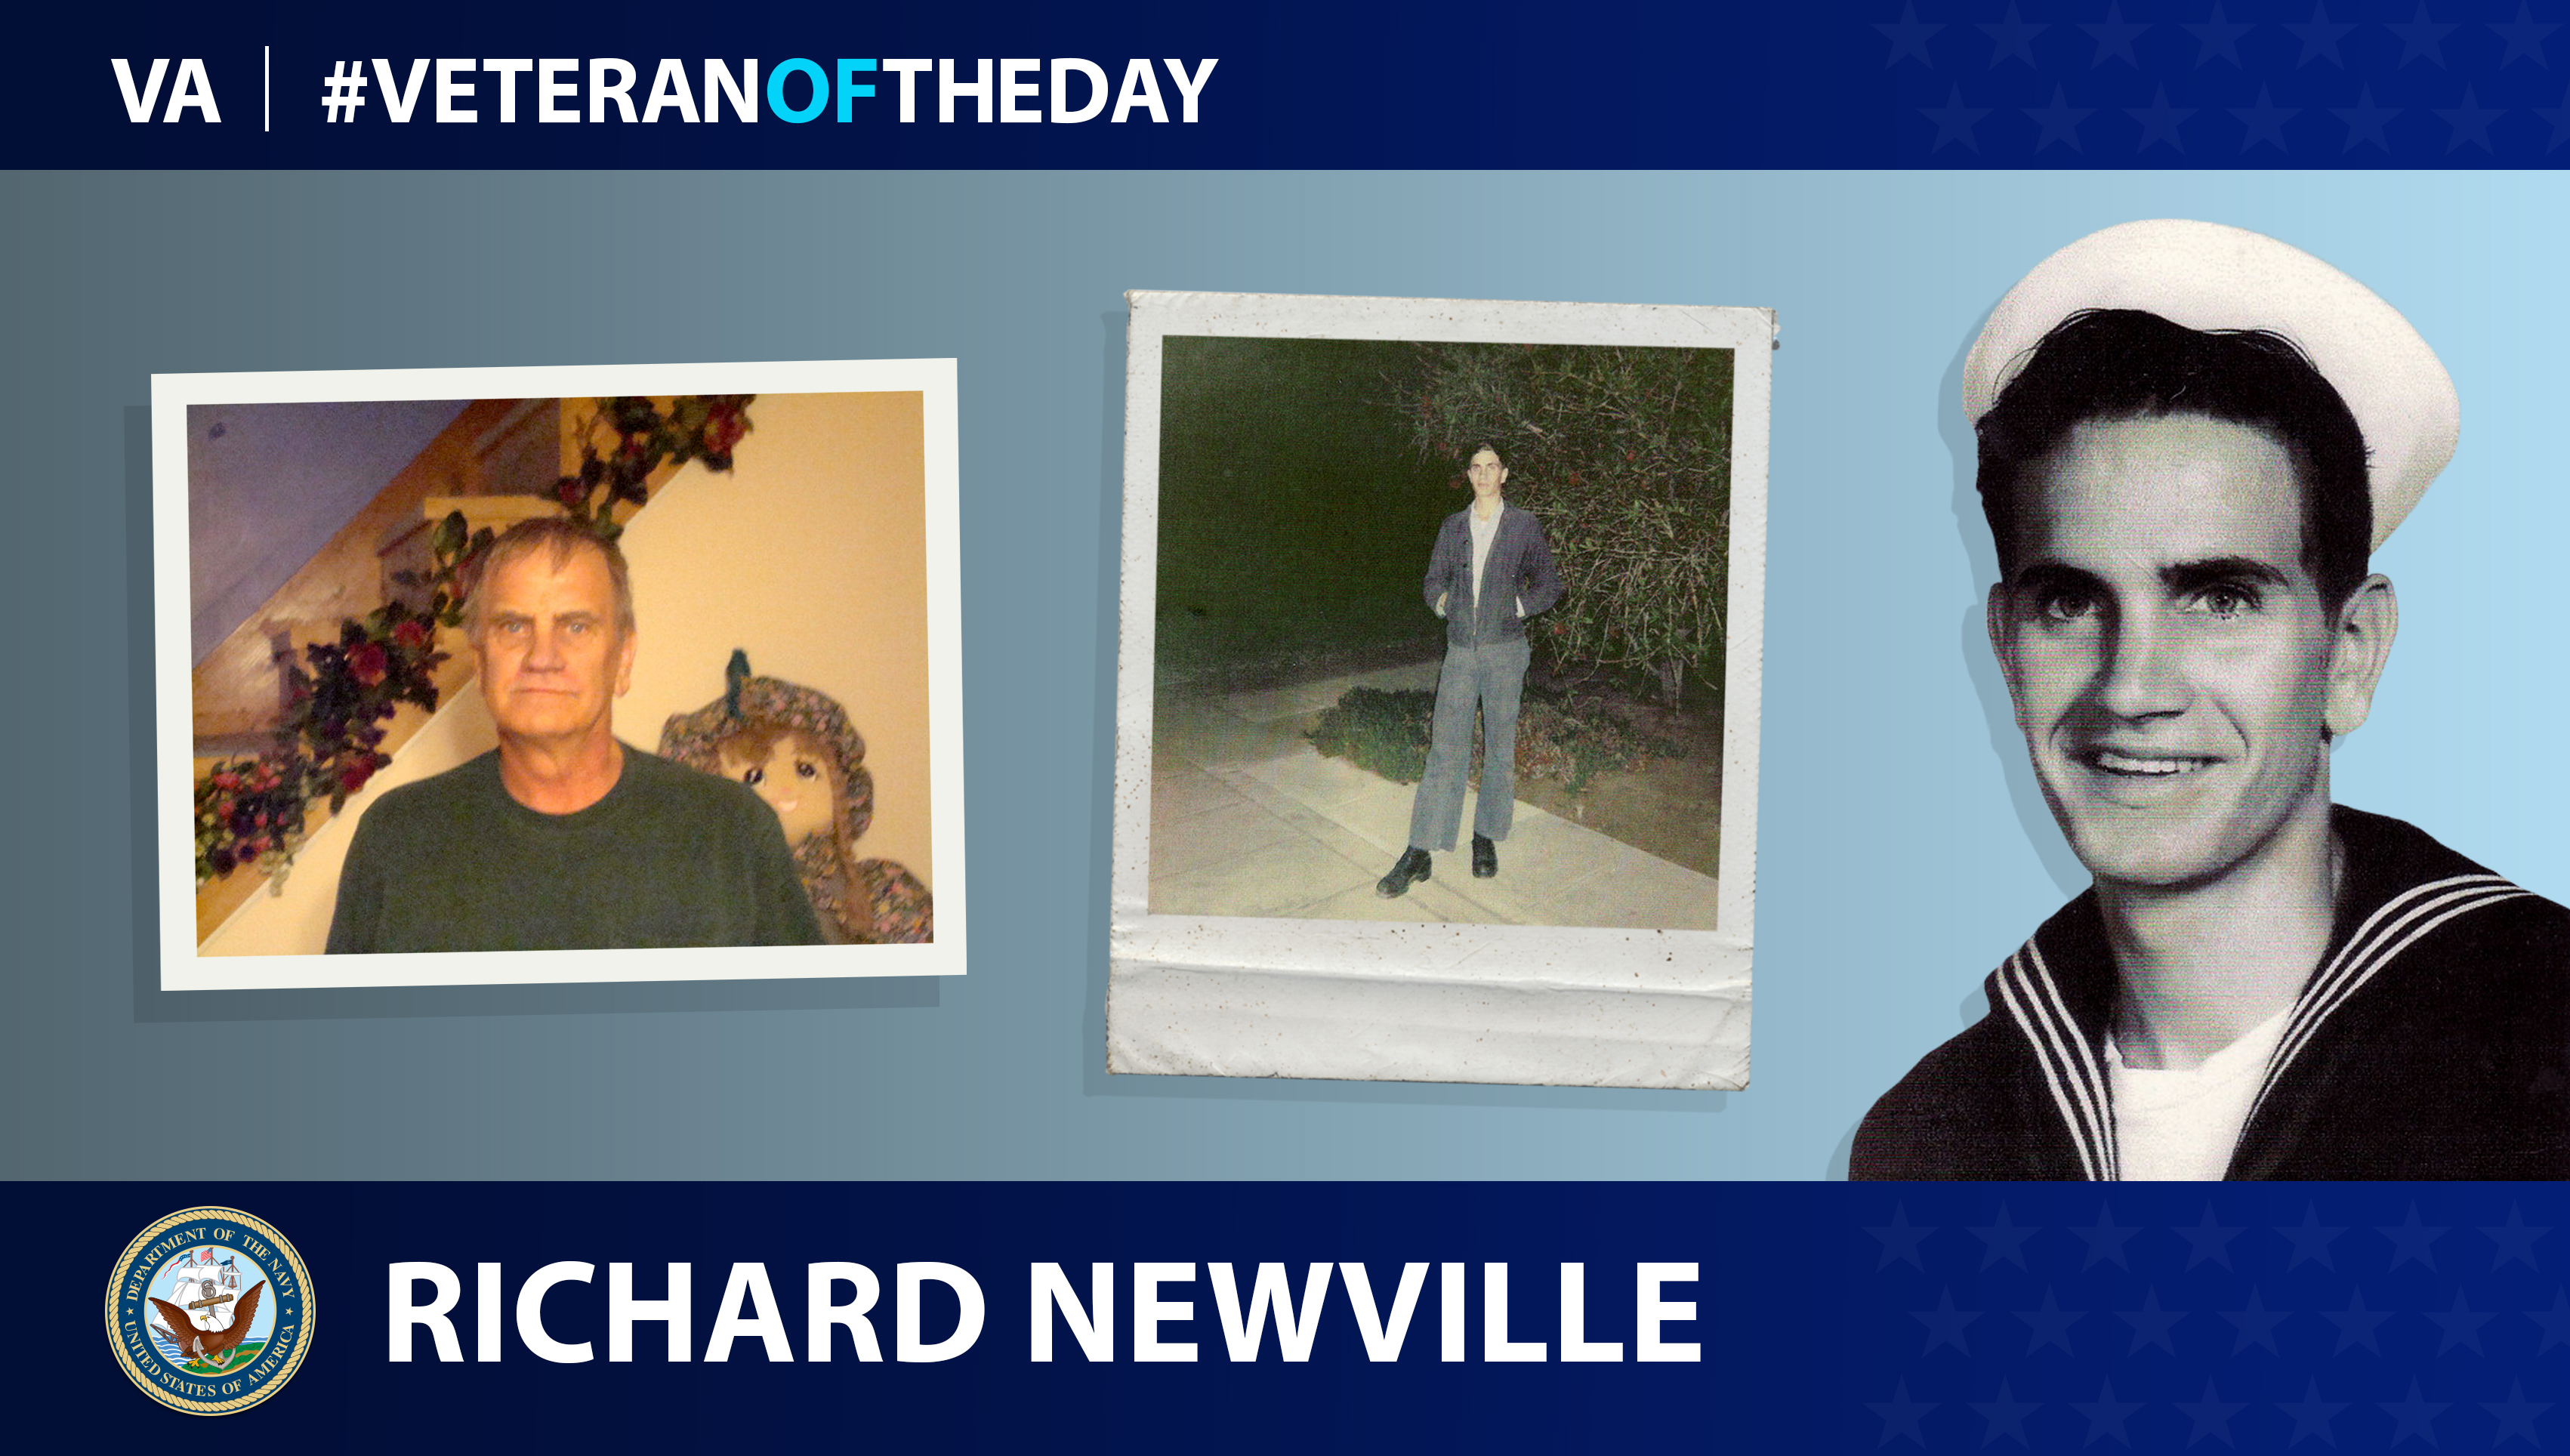 Navy Veteran Richard Newville is today's Veteran of the Day.